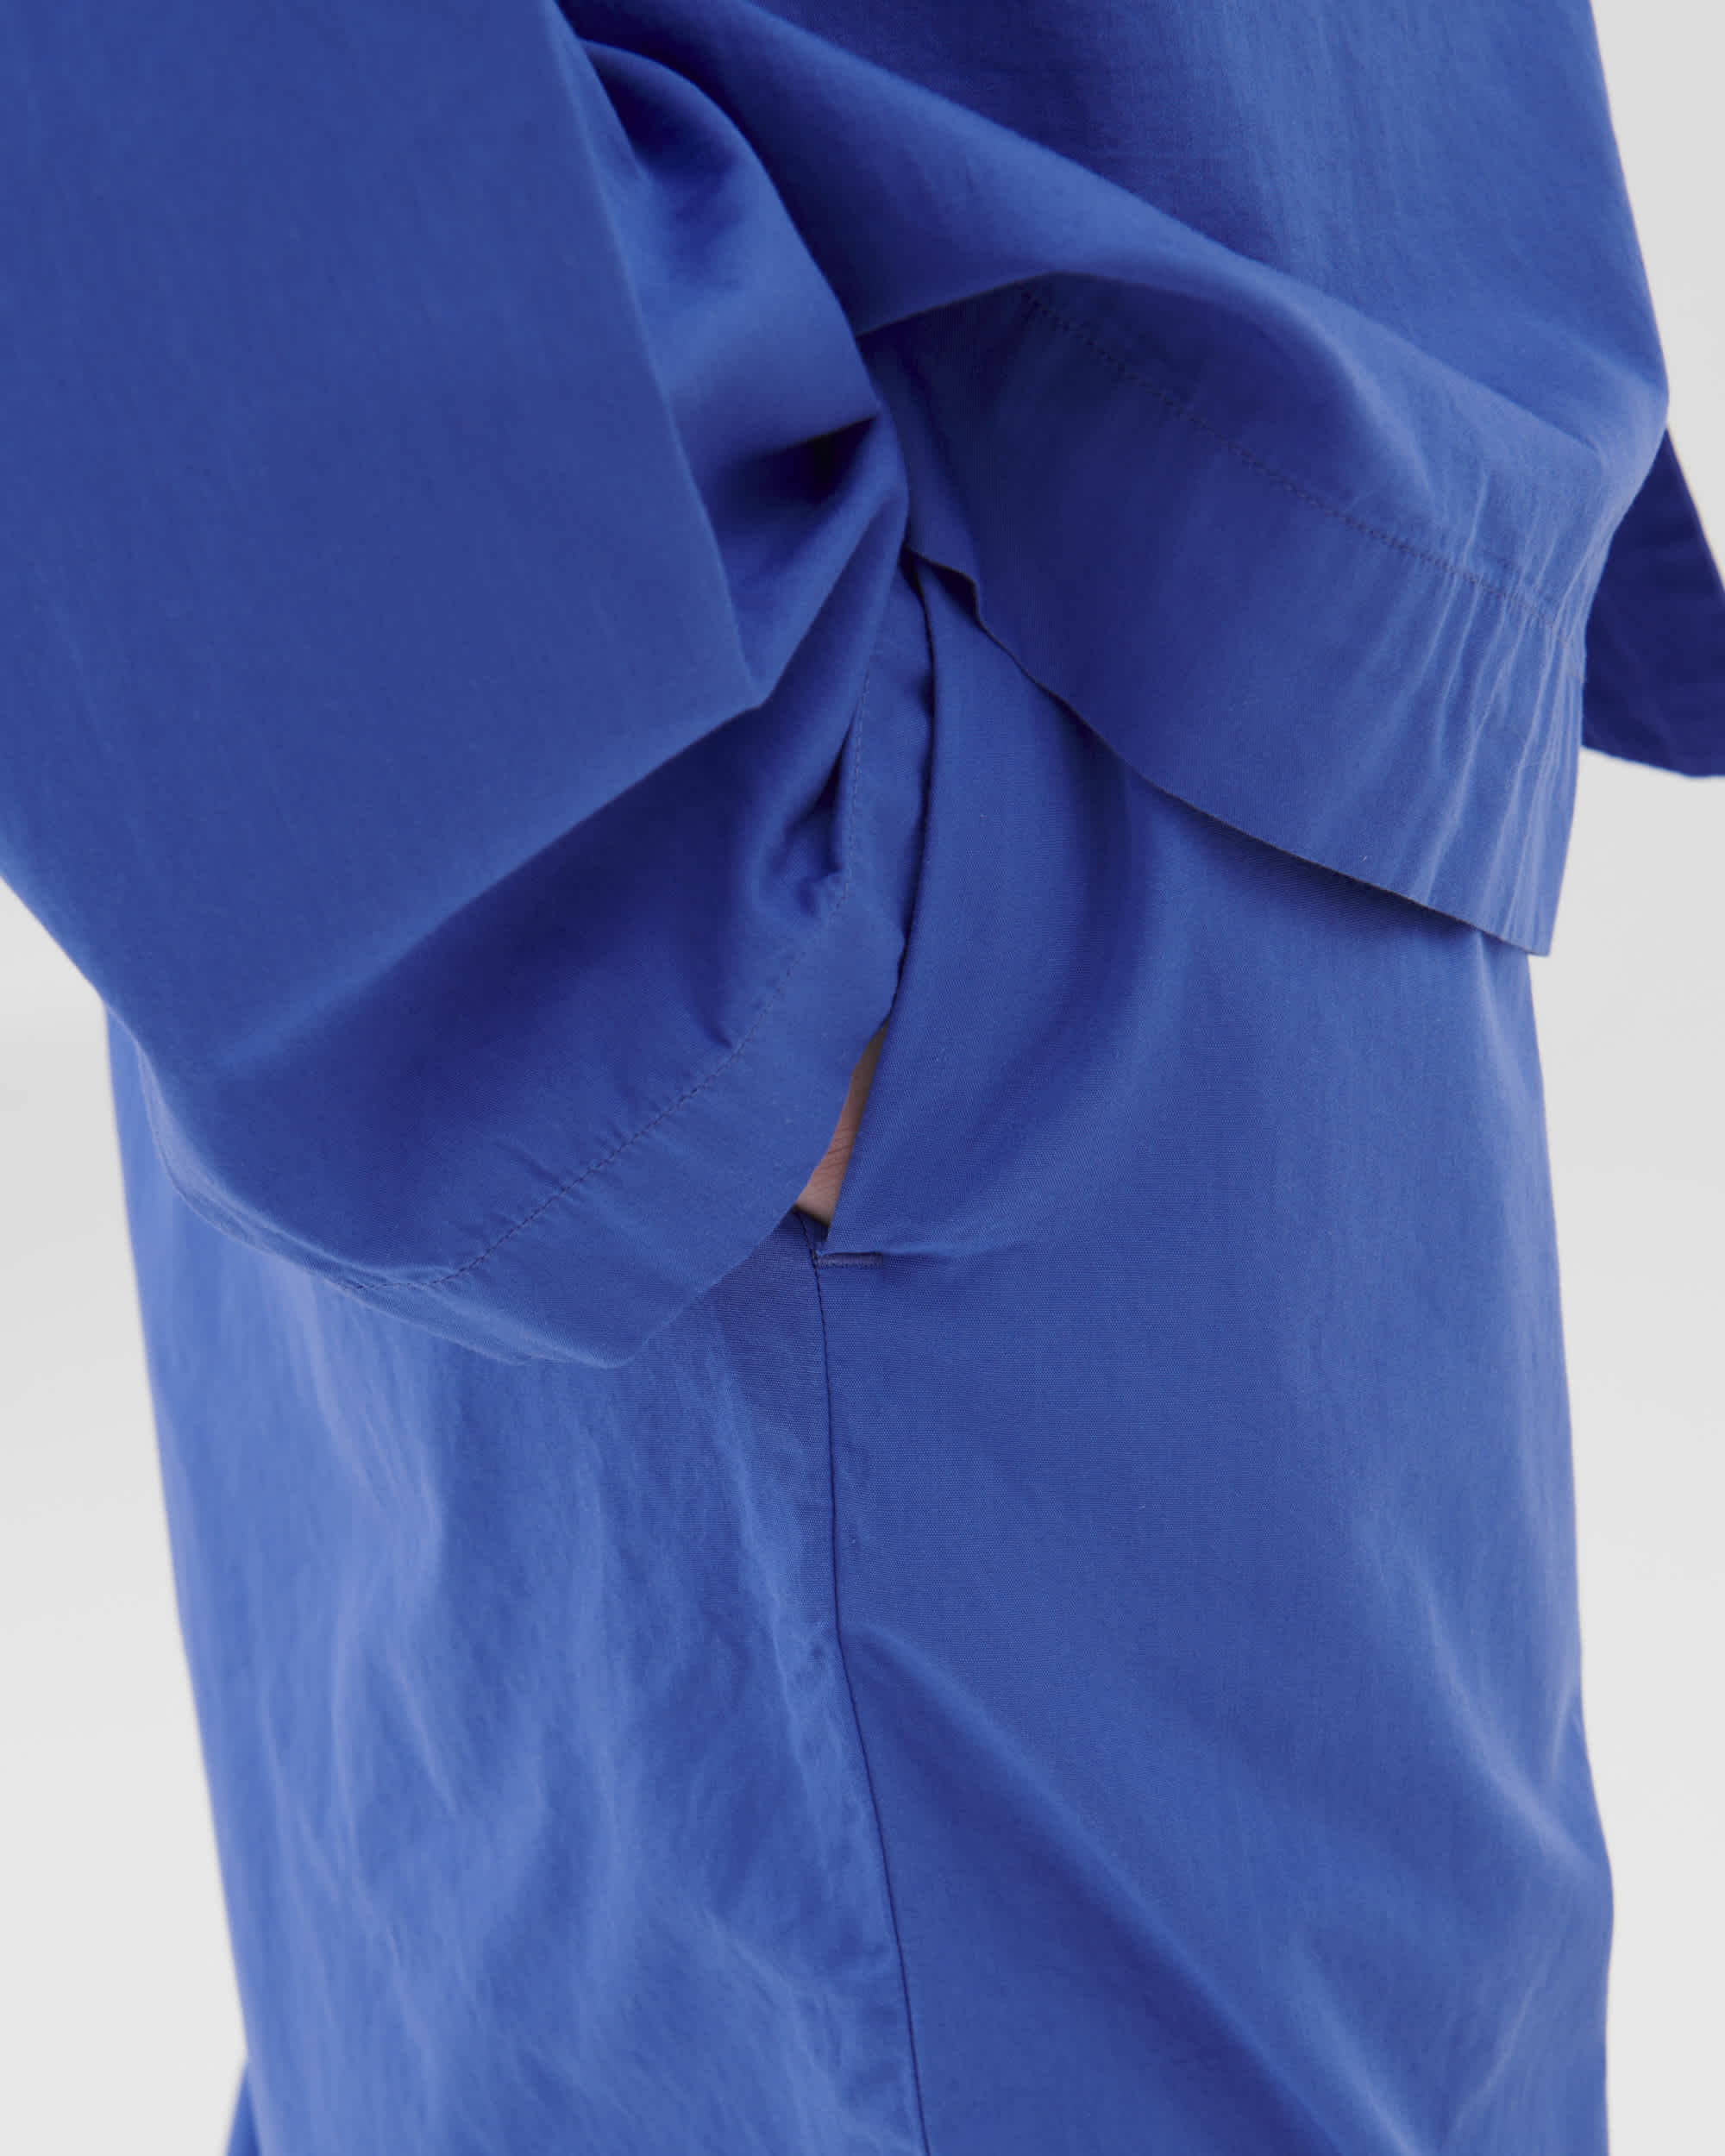 Sleepwear (Poplin) Pyjama Pant - Royal Blue